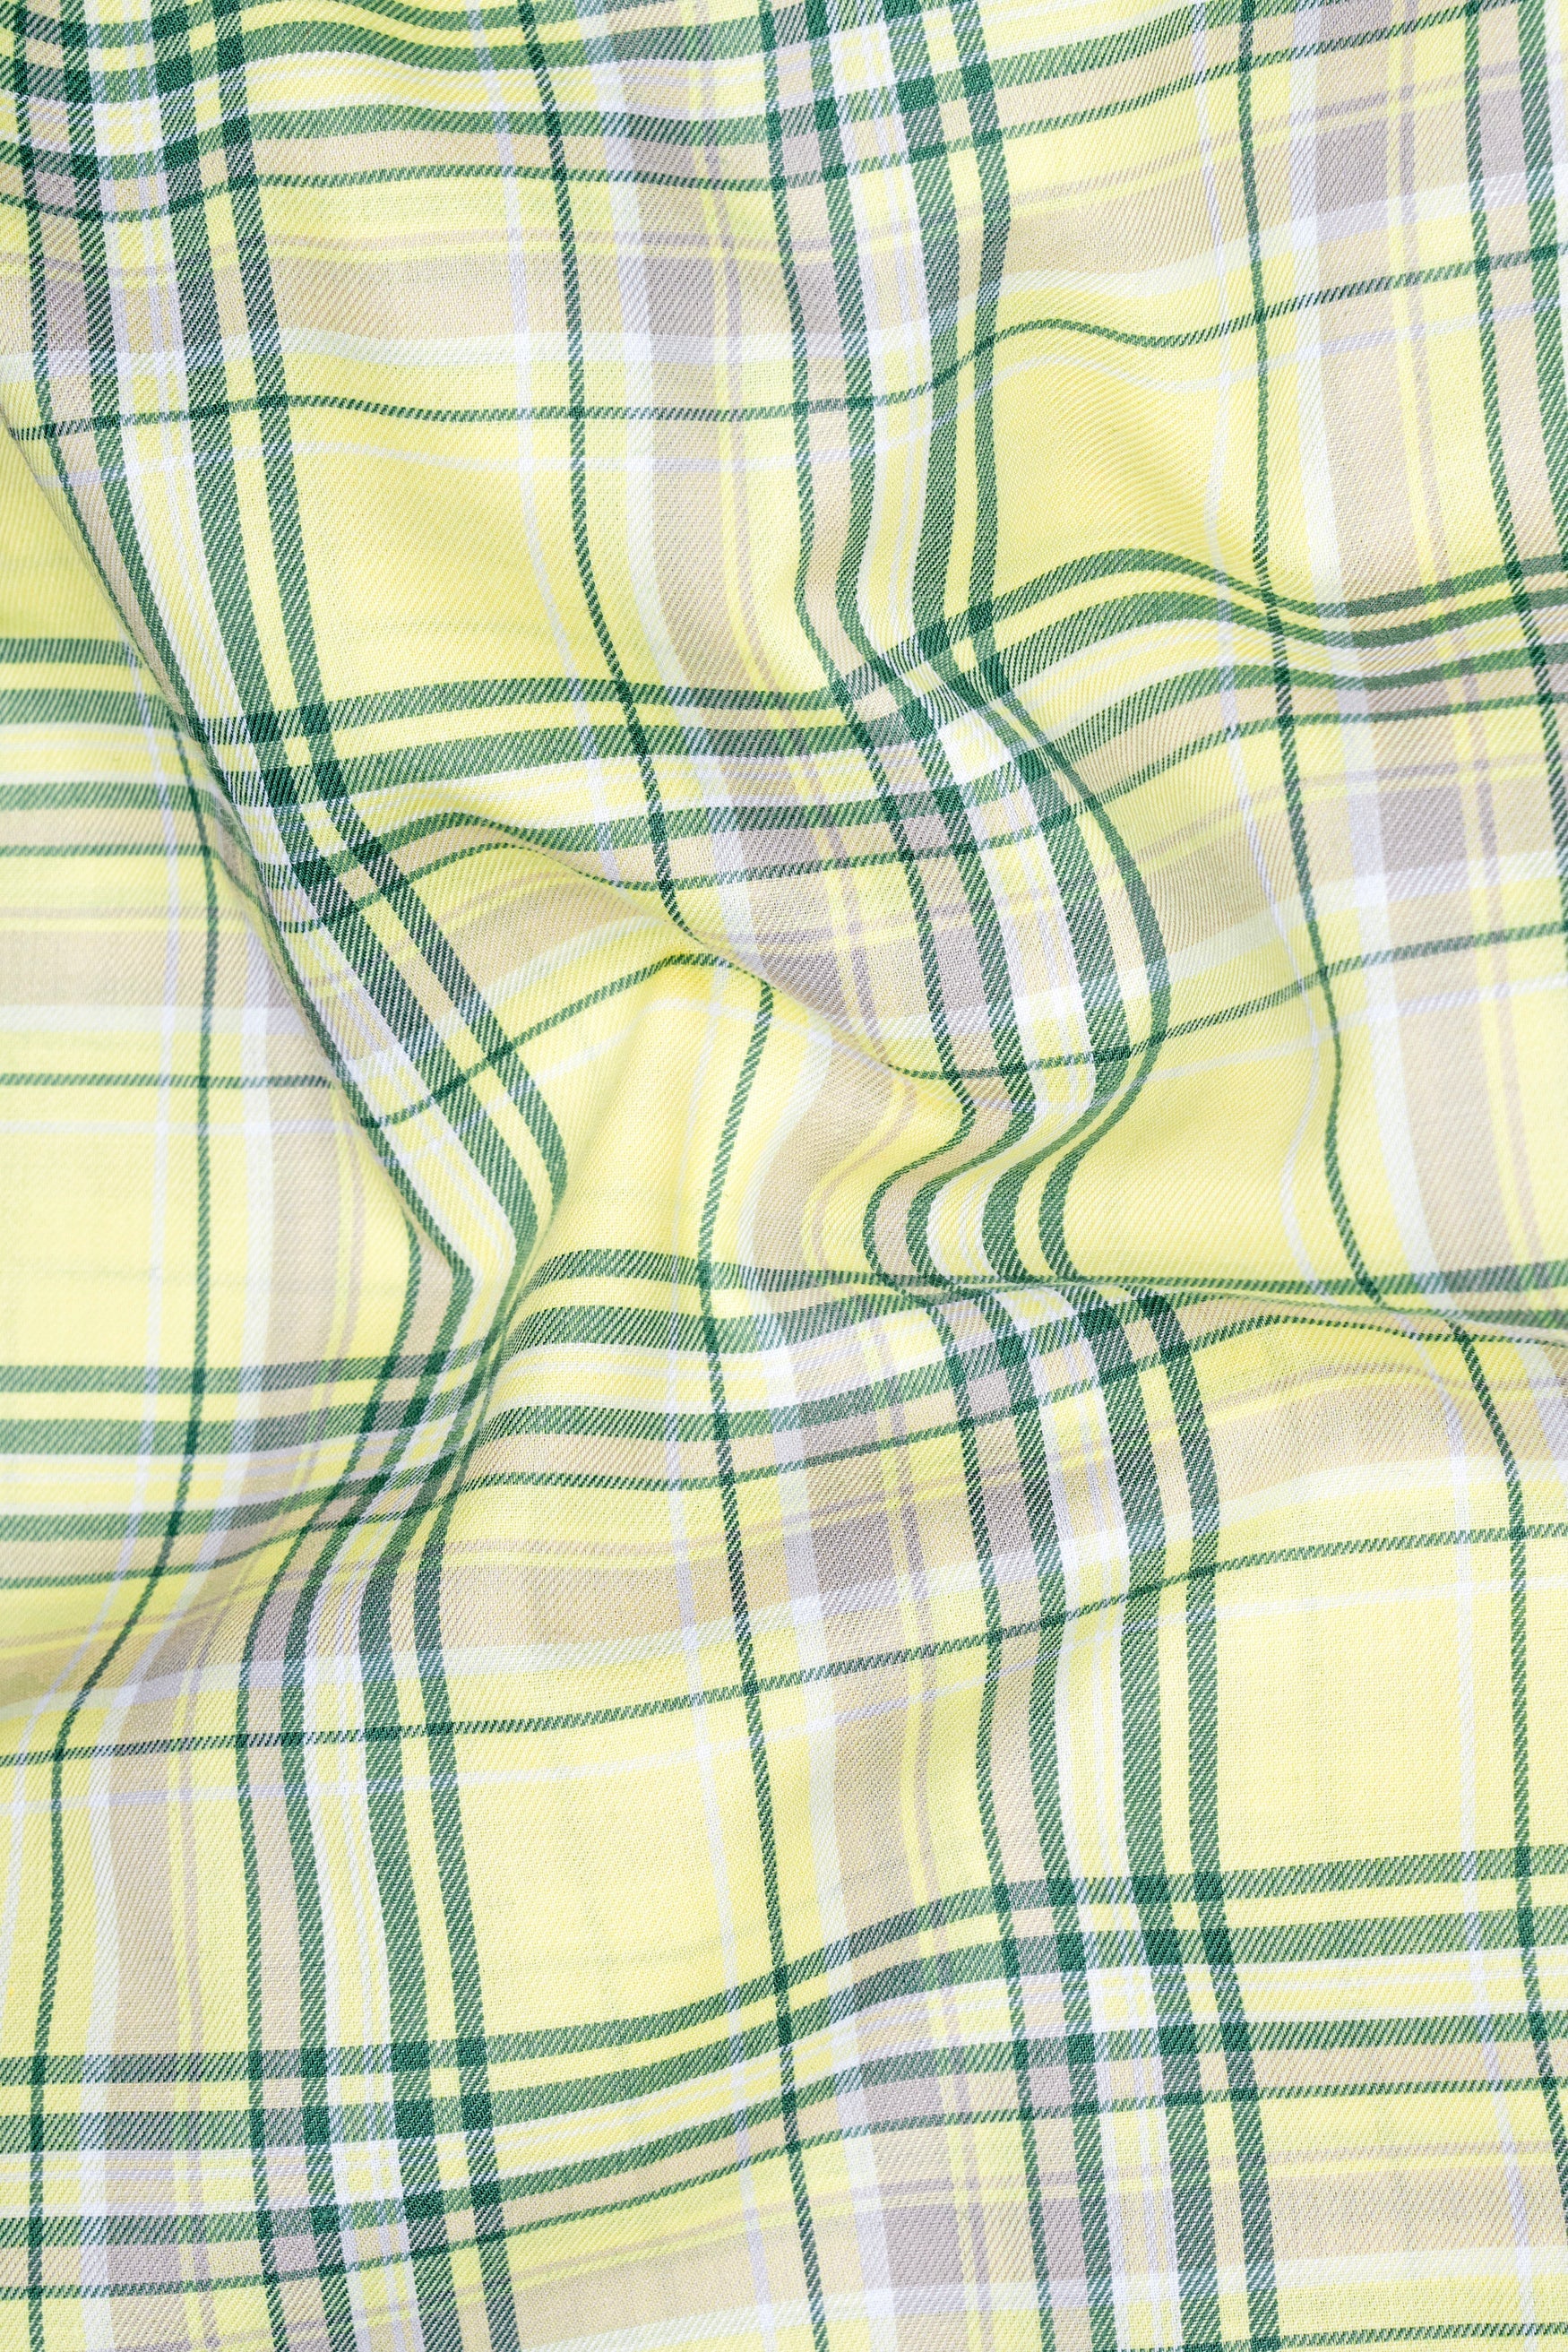 Primrose Yellow with Viridian Green plaid Twill Cotton Shirt